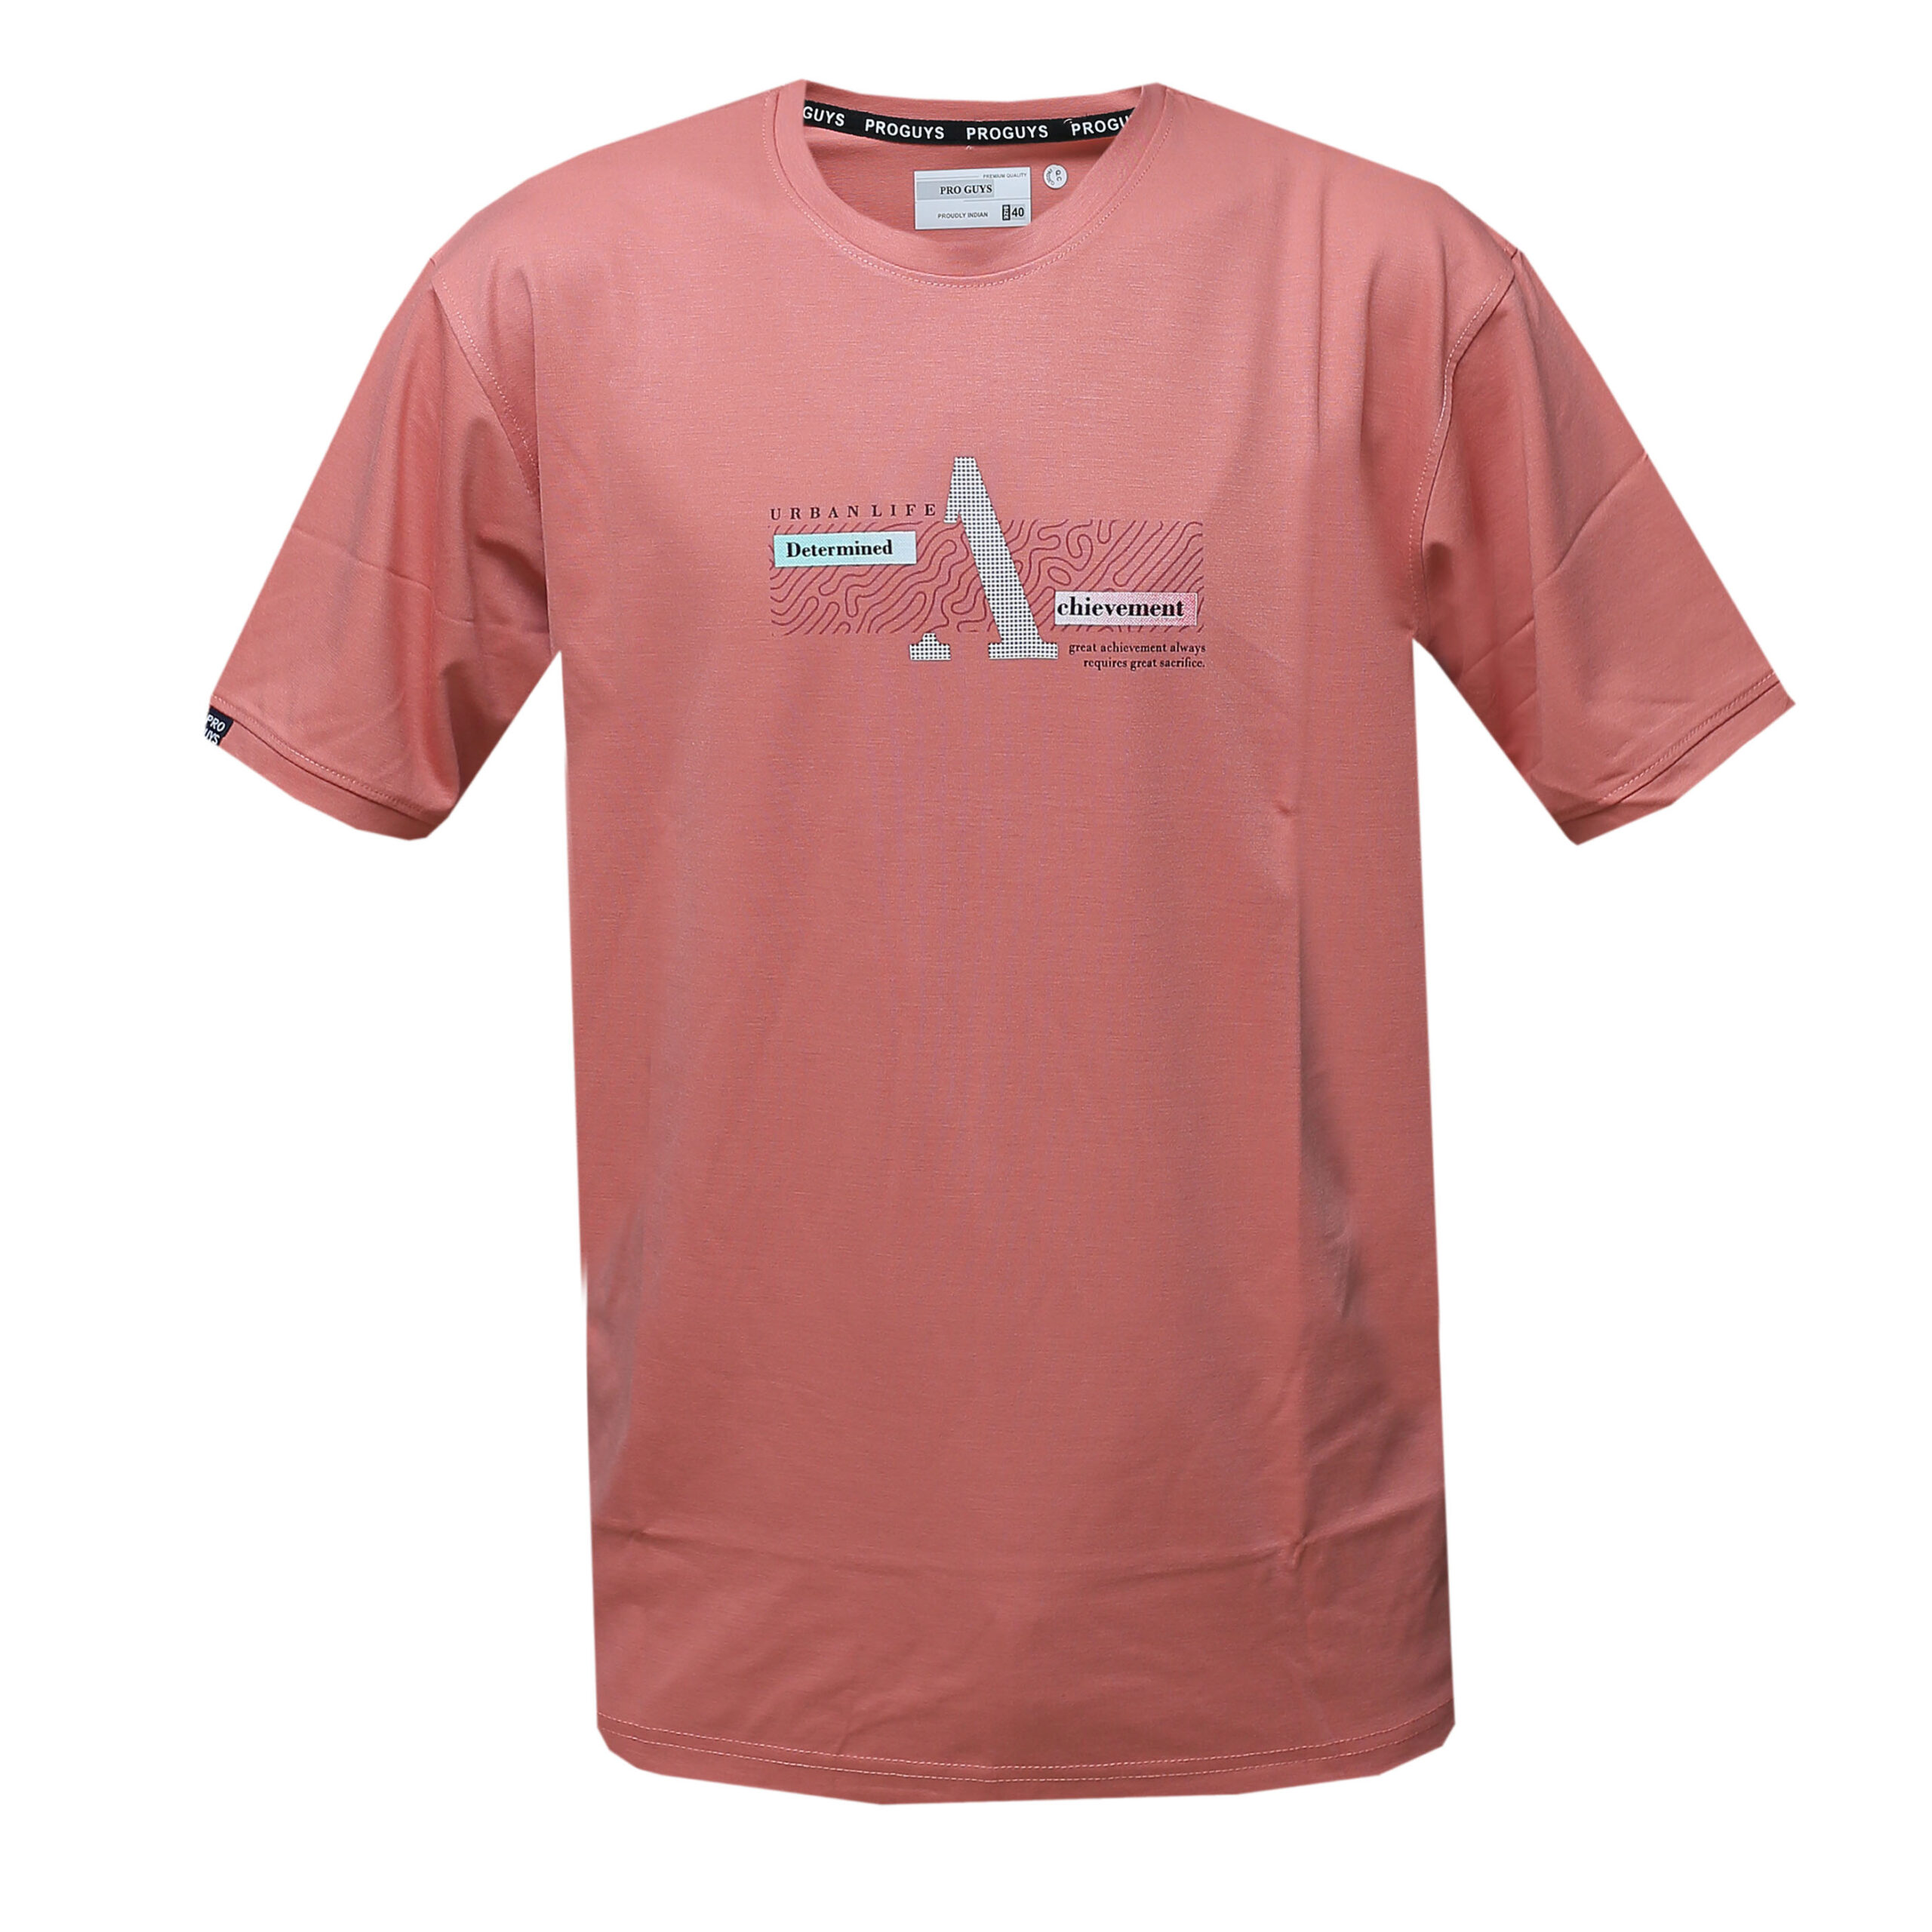 Pro T-Shirts for Men - Men's Casual Wear